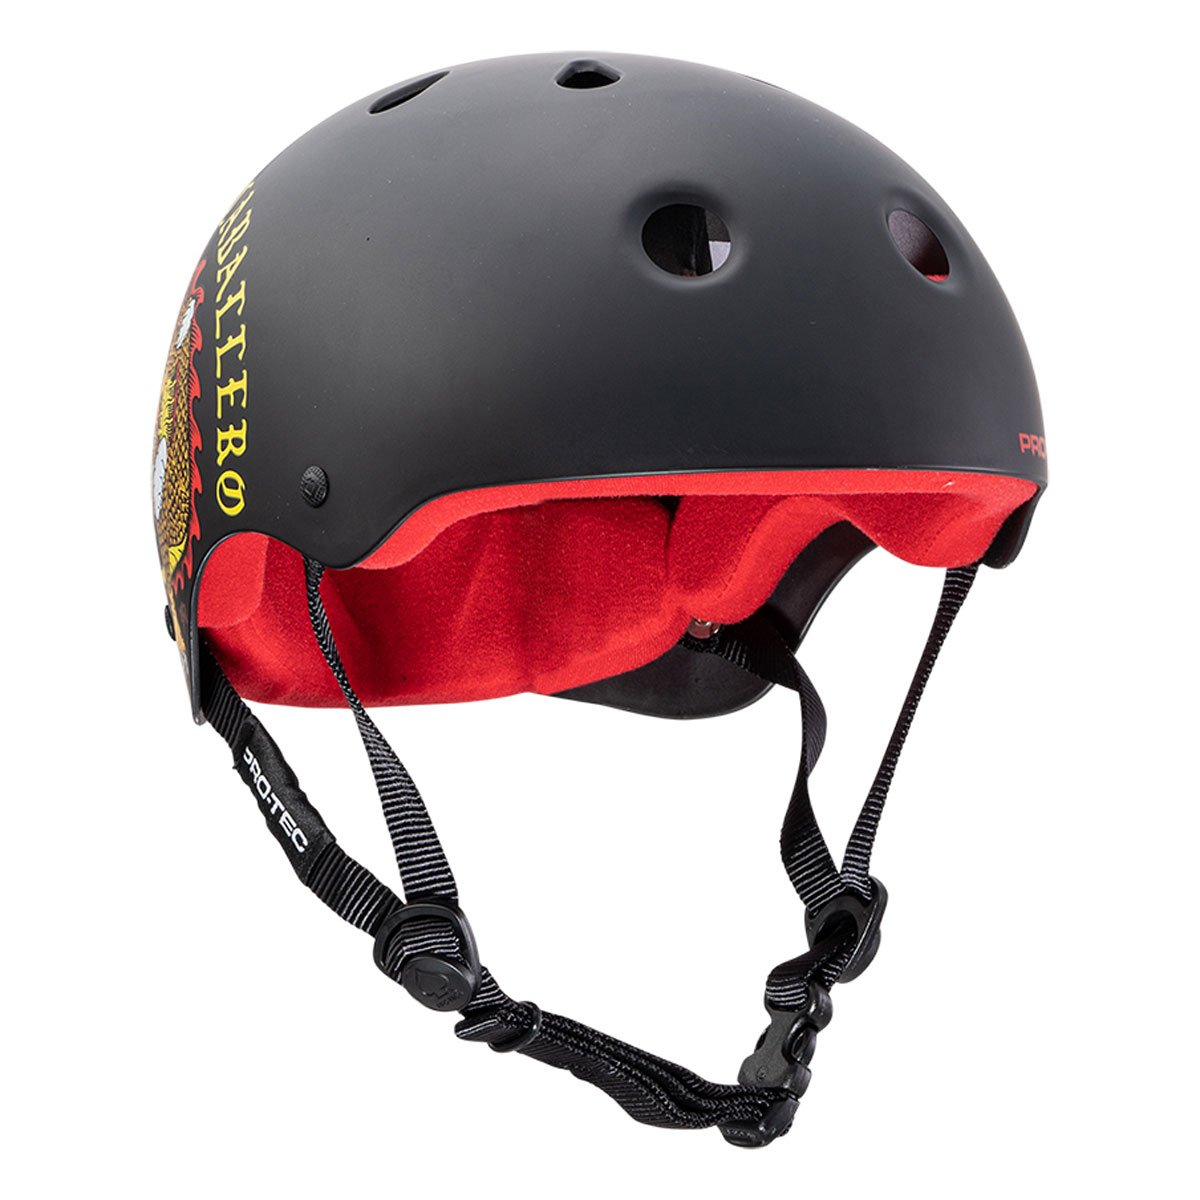 Pro-Tec Classic Certified Helmet - Cab Dragon image 1